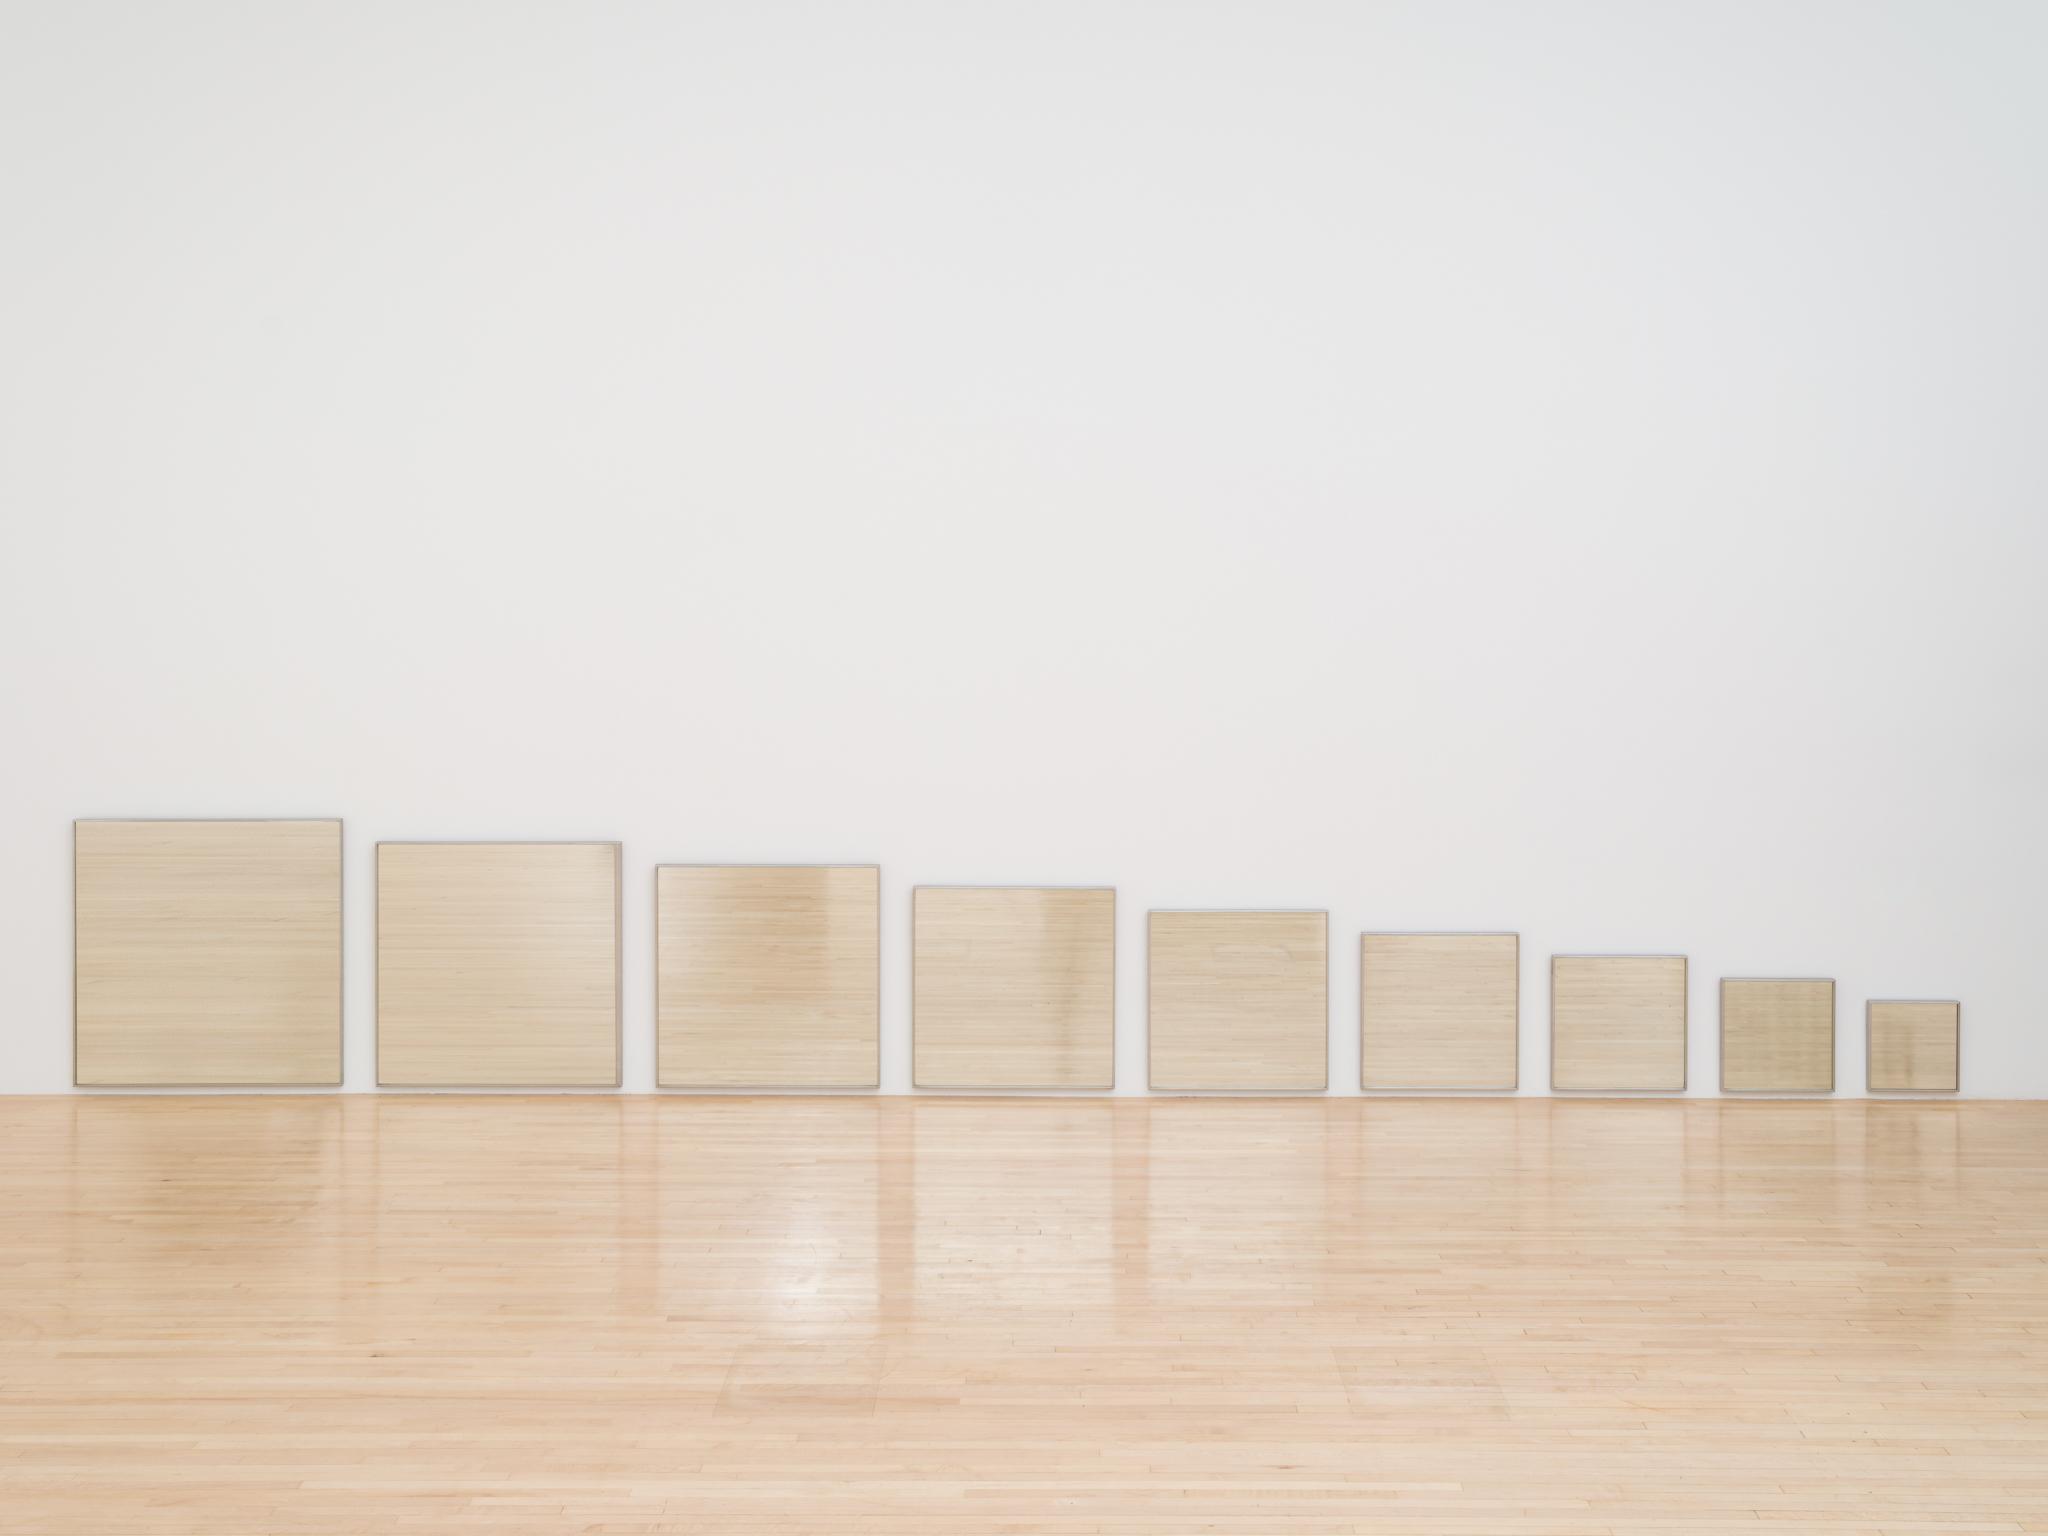 Robert Smithson's Mirage No. 1 is nine mirrors hung near the floor reflecting the wooden floor